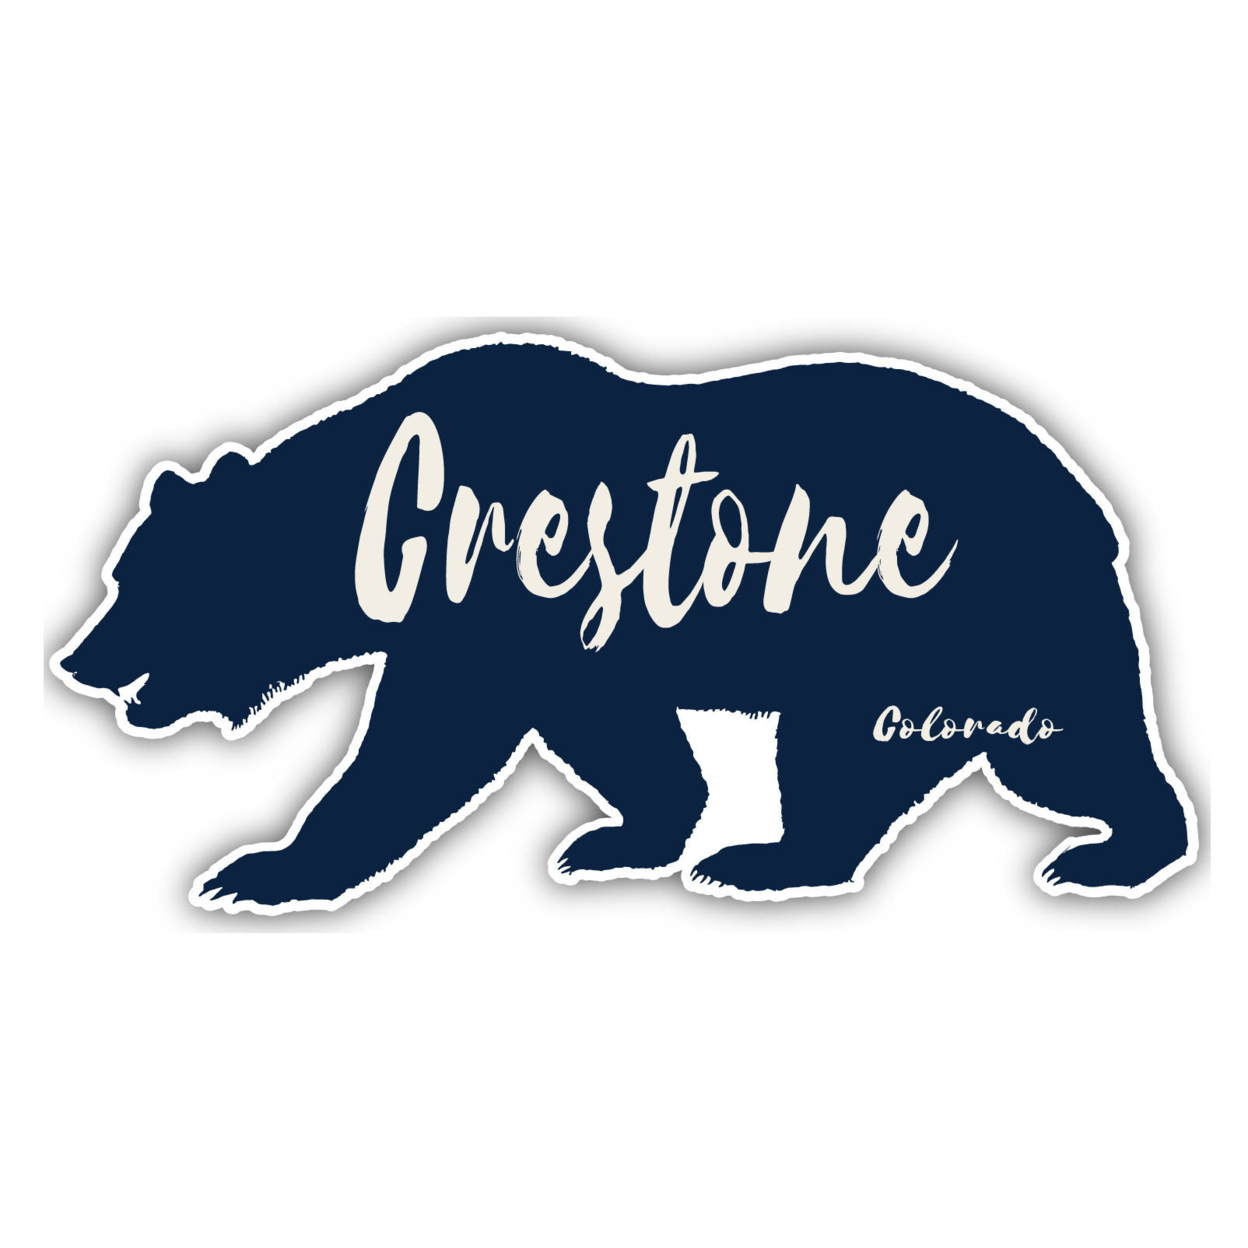 Crestone Colorado Souvenir Decorative Stickers (Choose Theme And Size) - Single Unit, 12-Inch, Camp Life